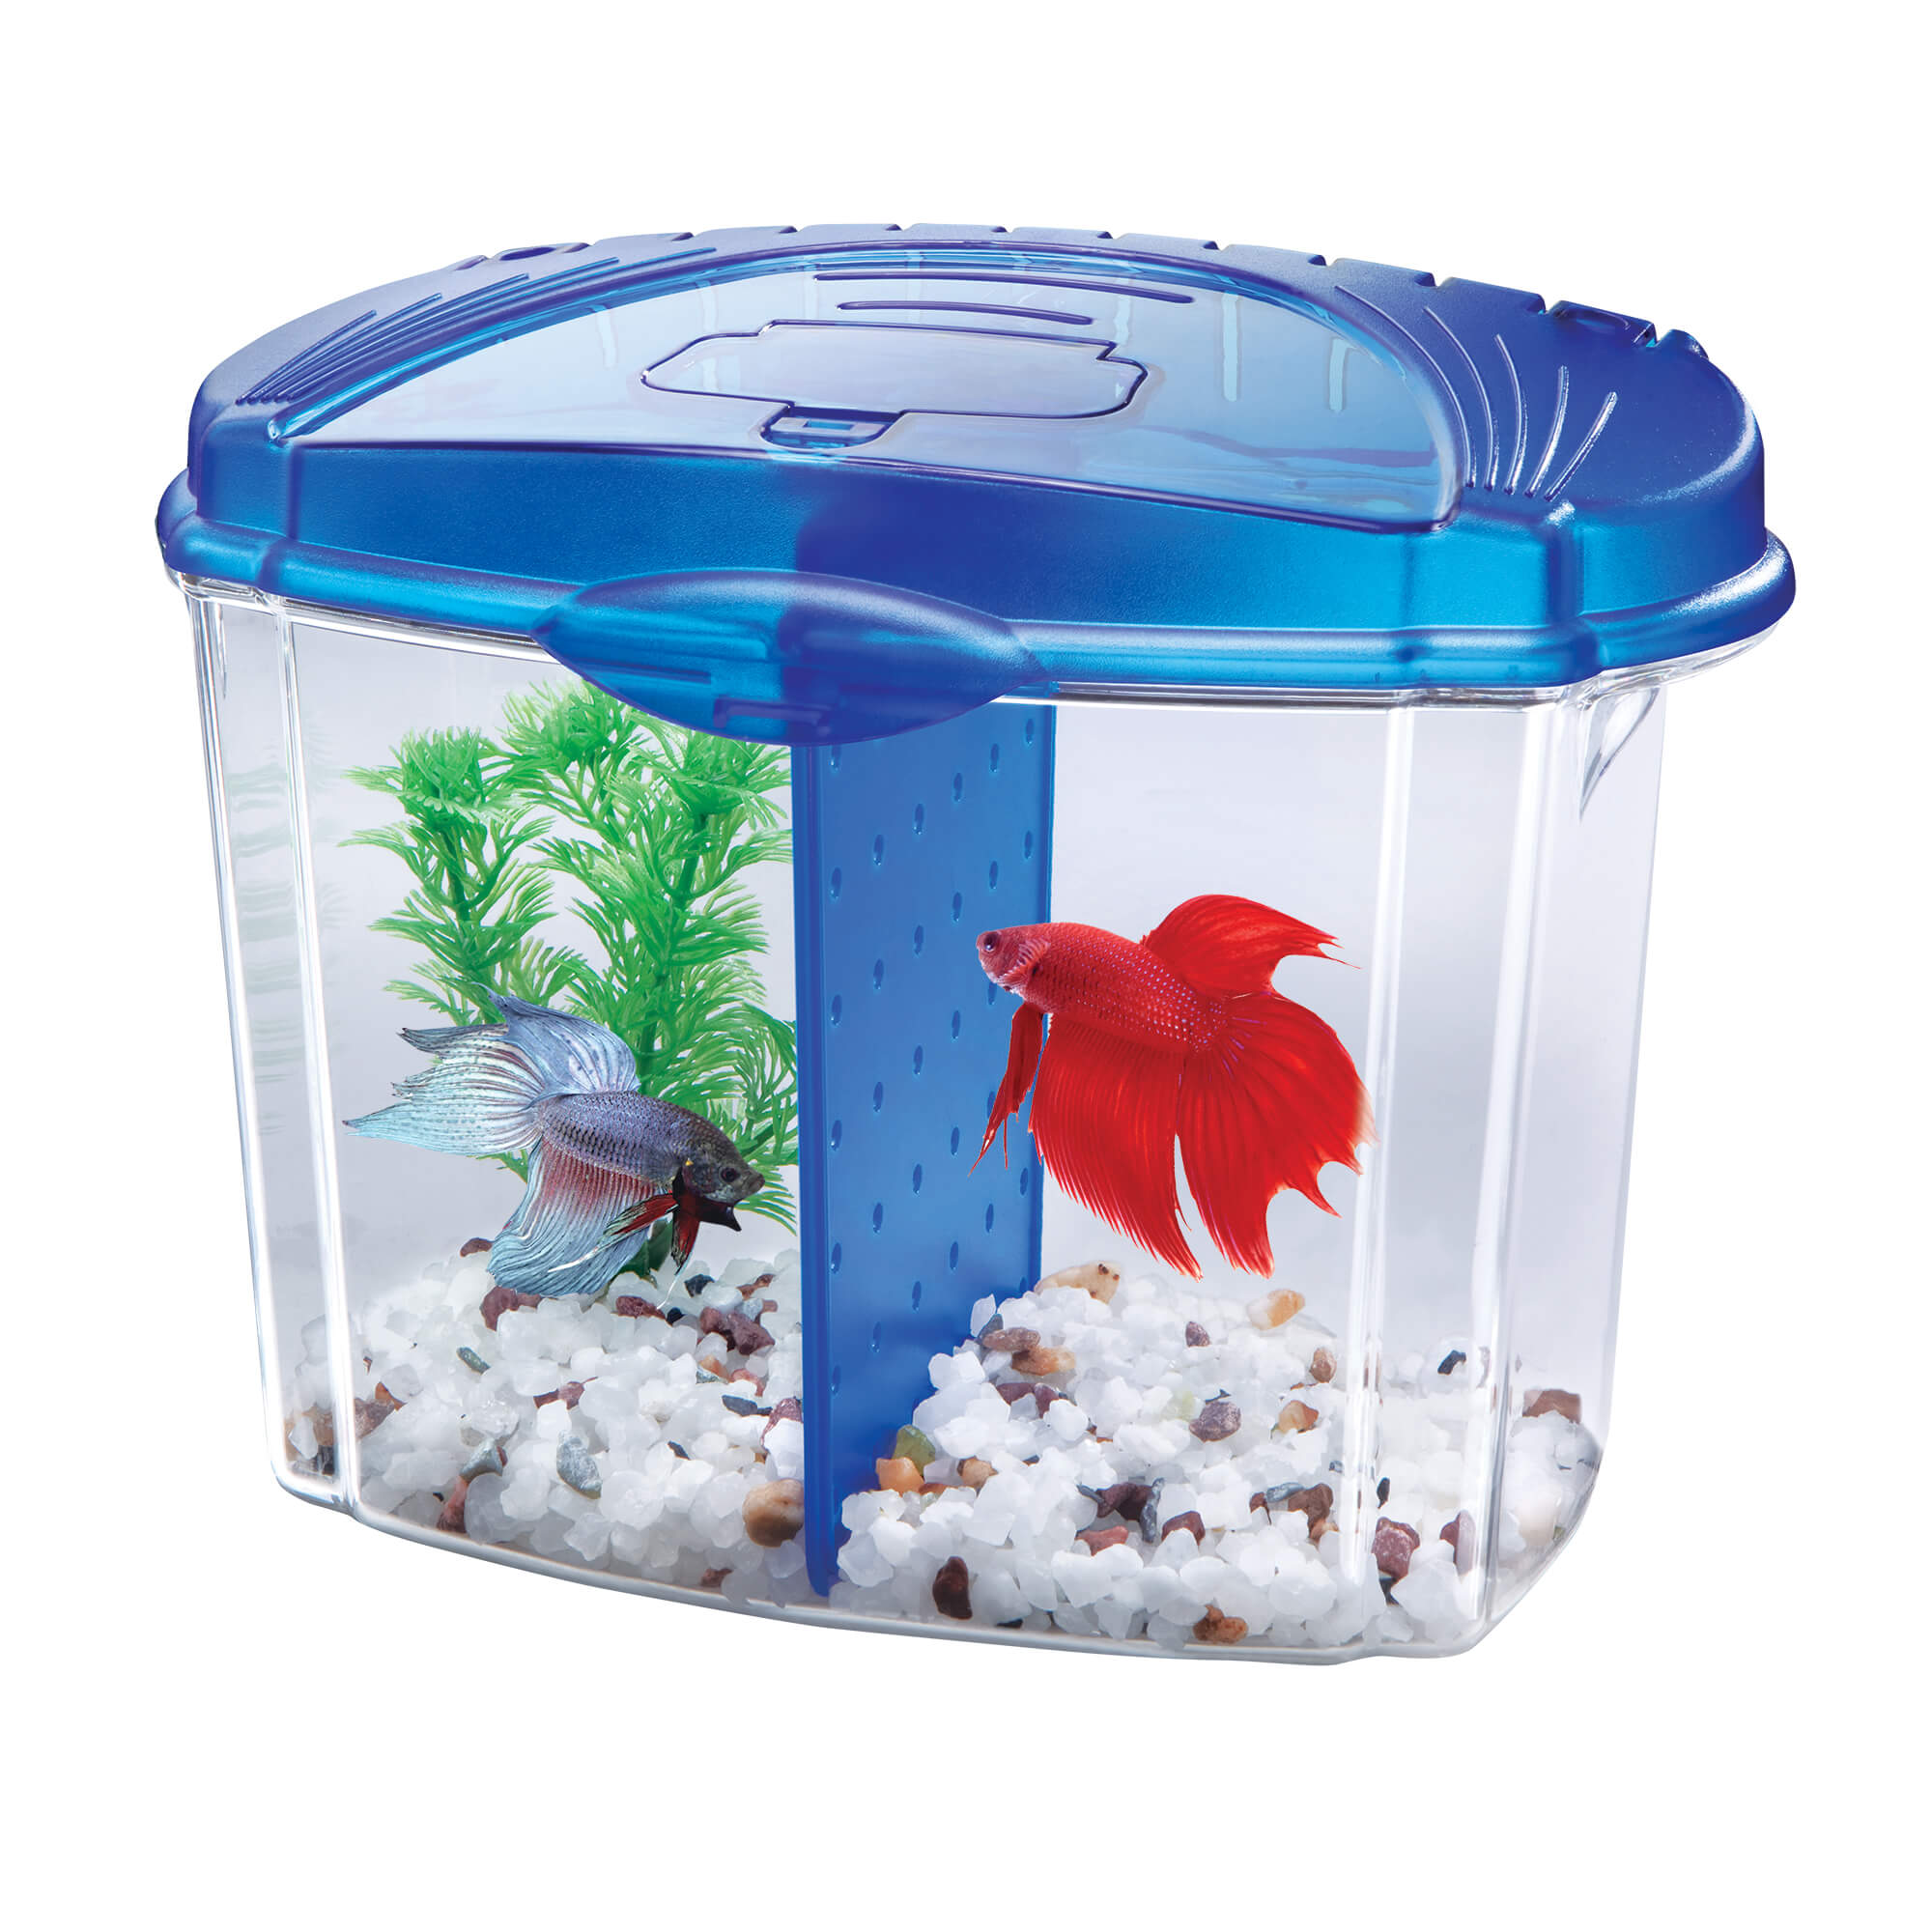 Aqueon Betta Bowl Aquarium Kit Blue 9.1″ x 5.1″ x 7.2″